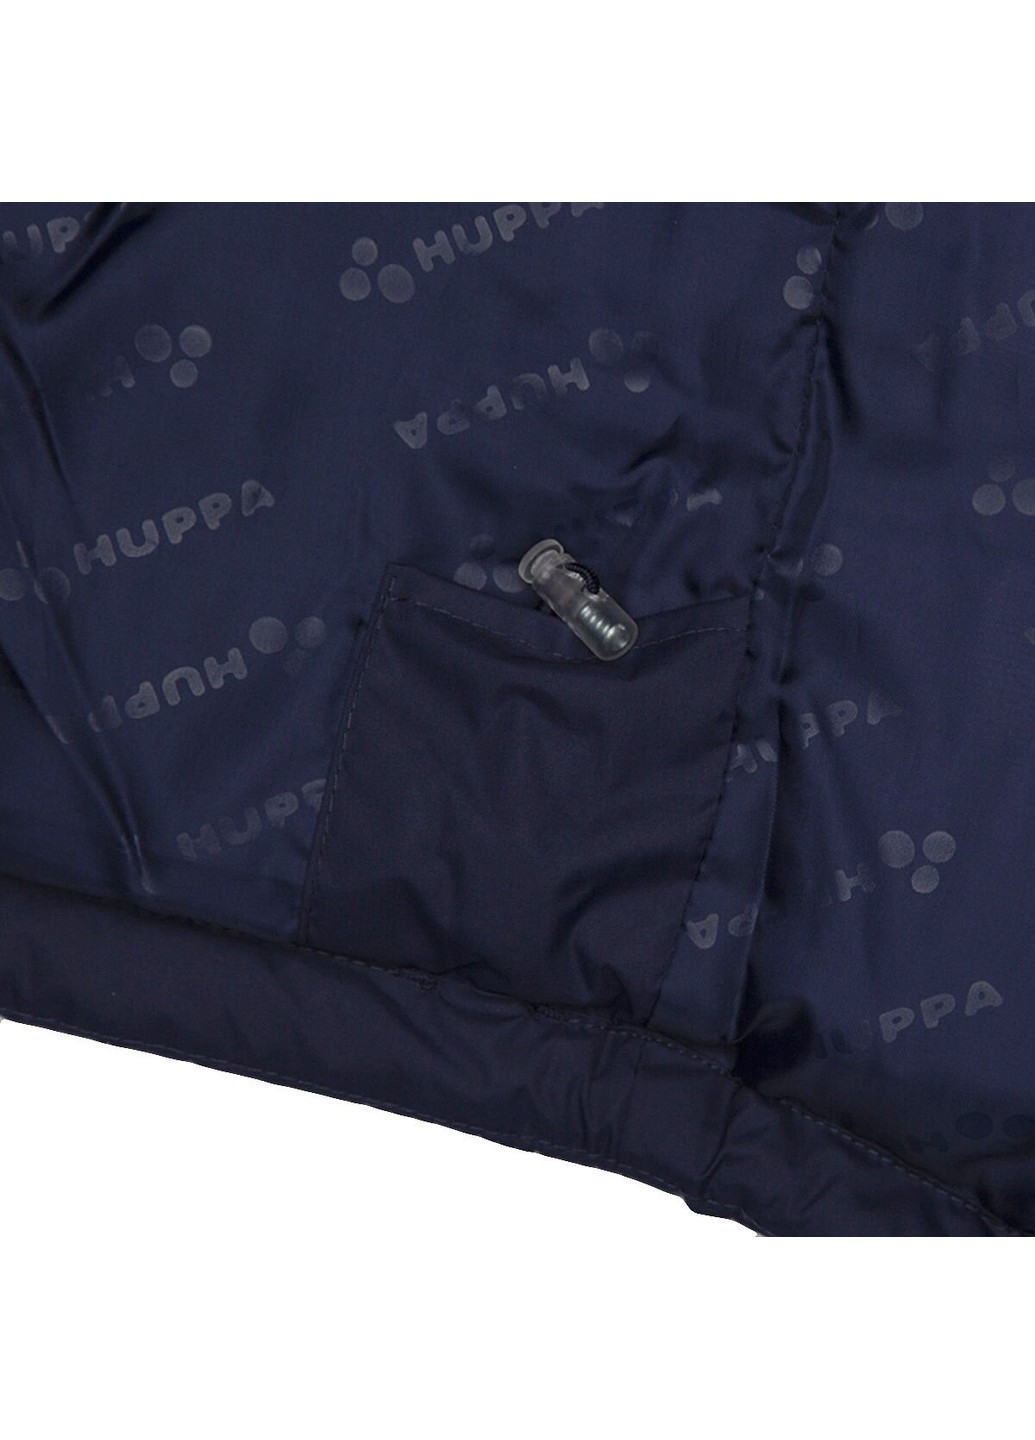 Синяя зимняя куртка-пуховик moody 1 Huppa